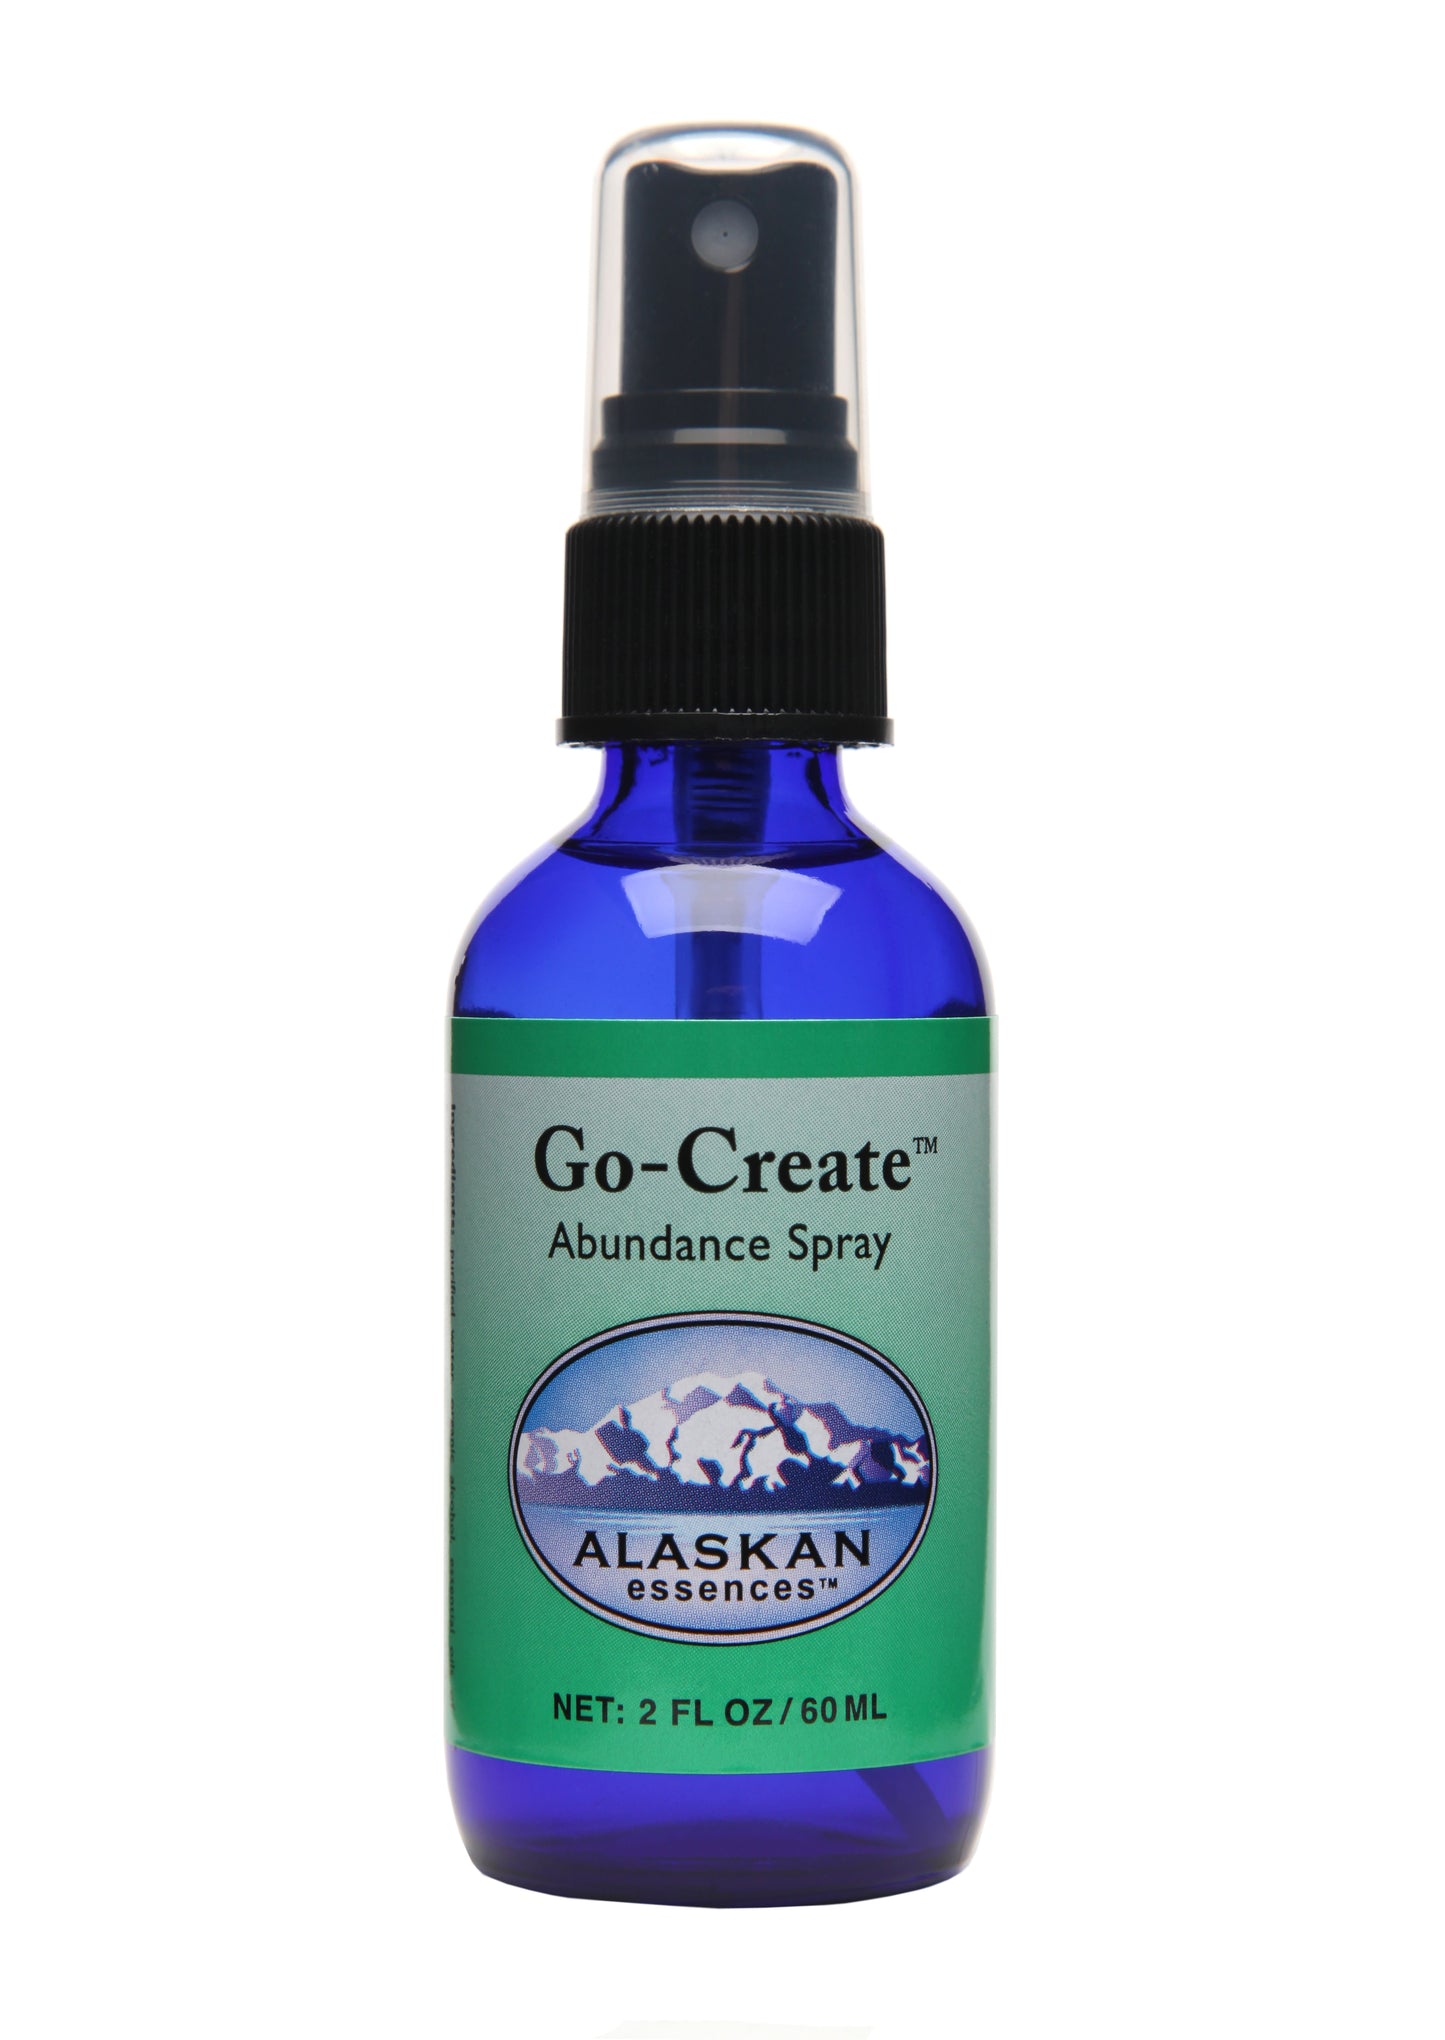 Go-Create essence spray